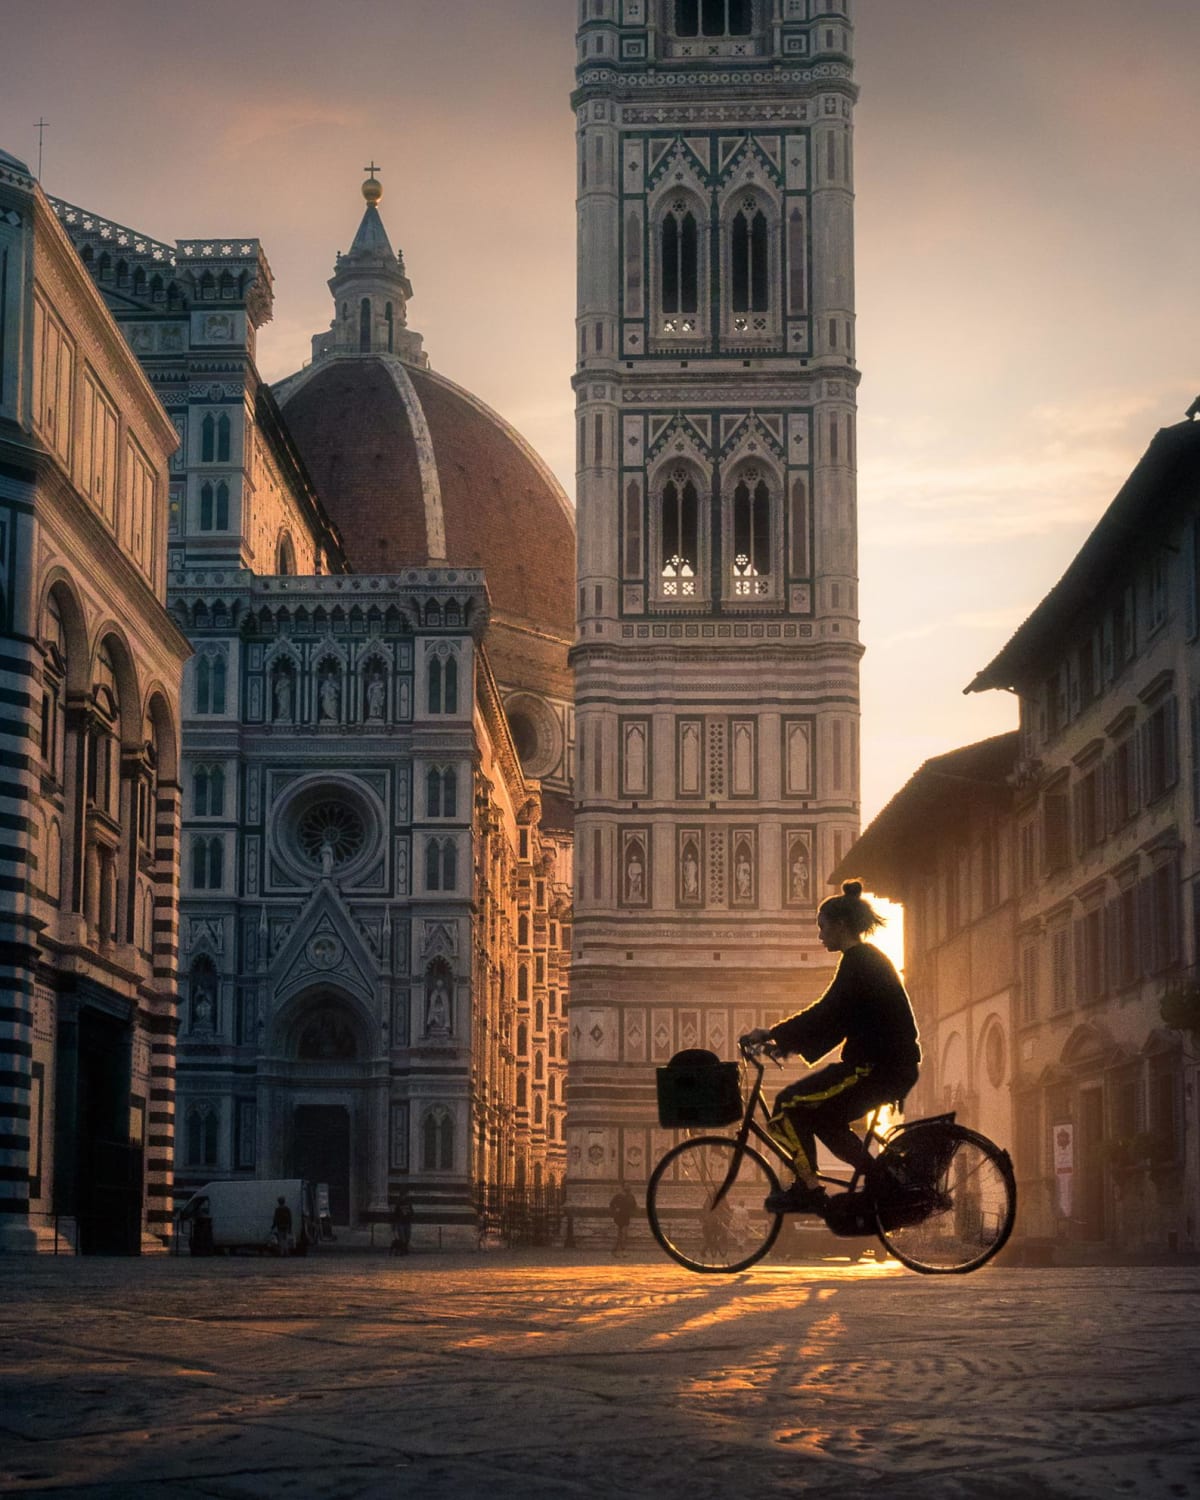 Sunrise in Florence [oc]